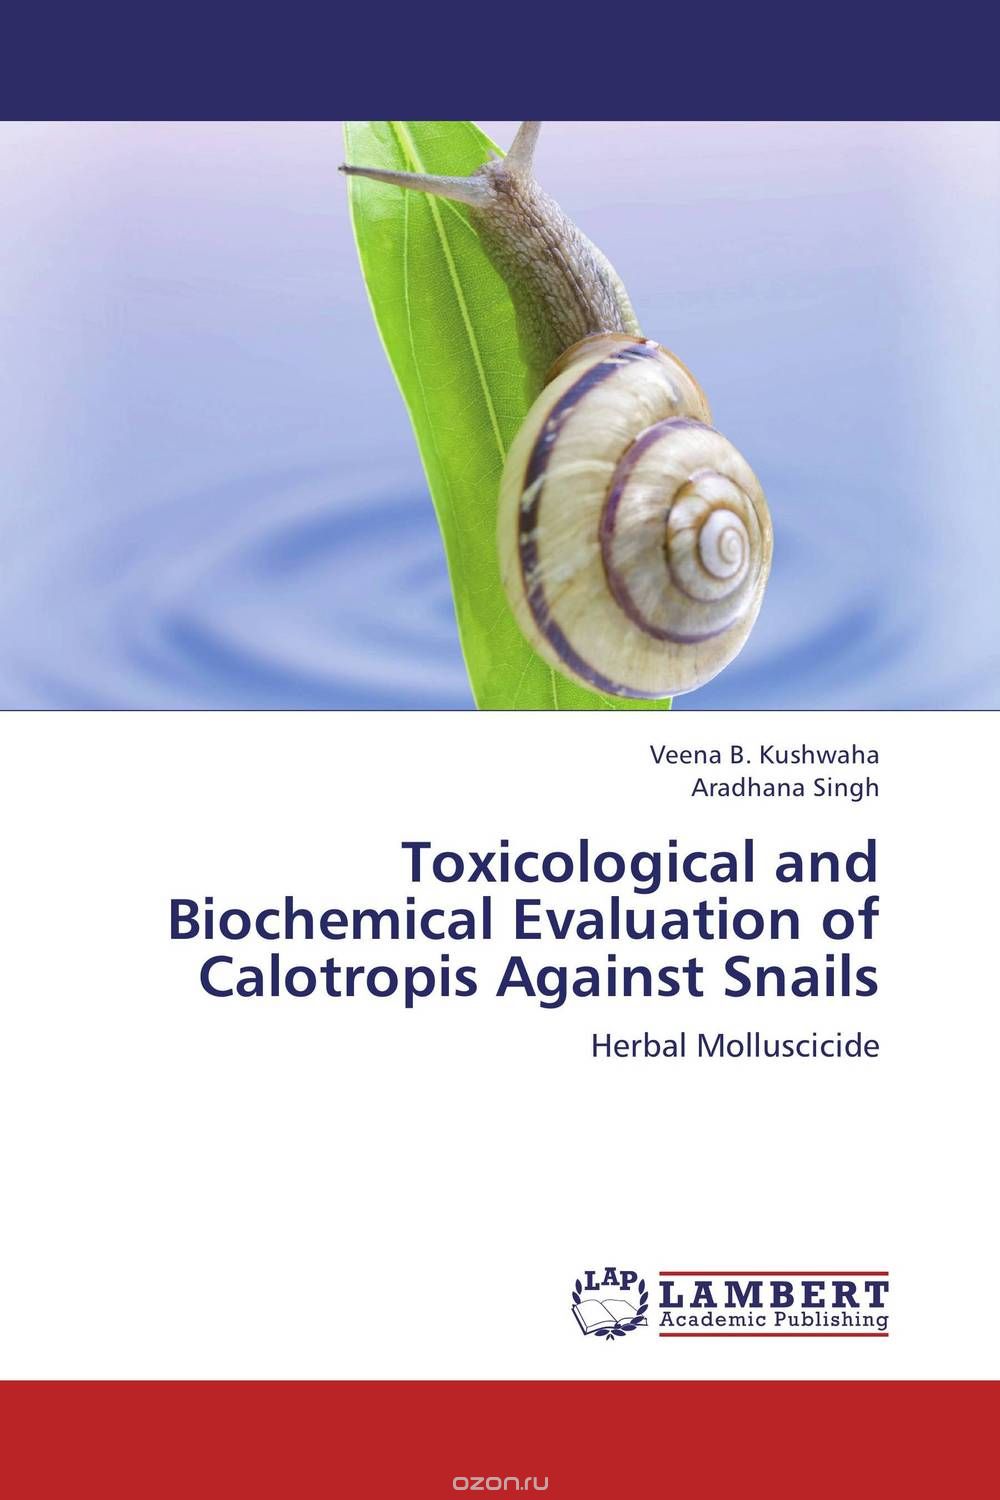 Скачать книгу "Toxicological and Biochemical Evaluation of Calotropis Against Snails"